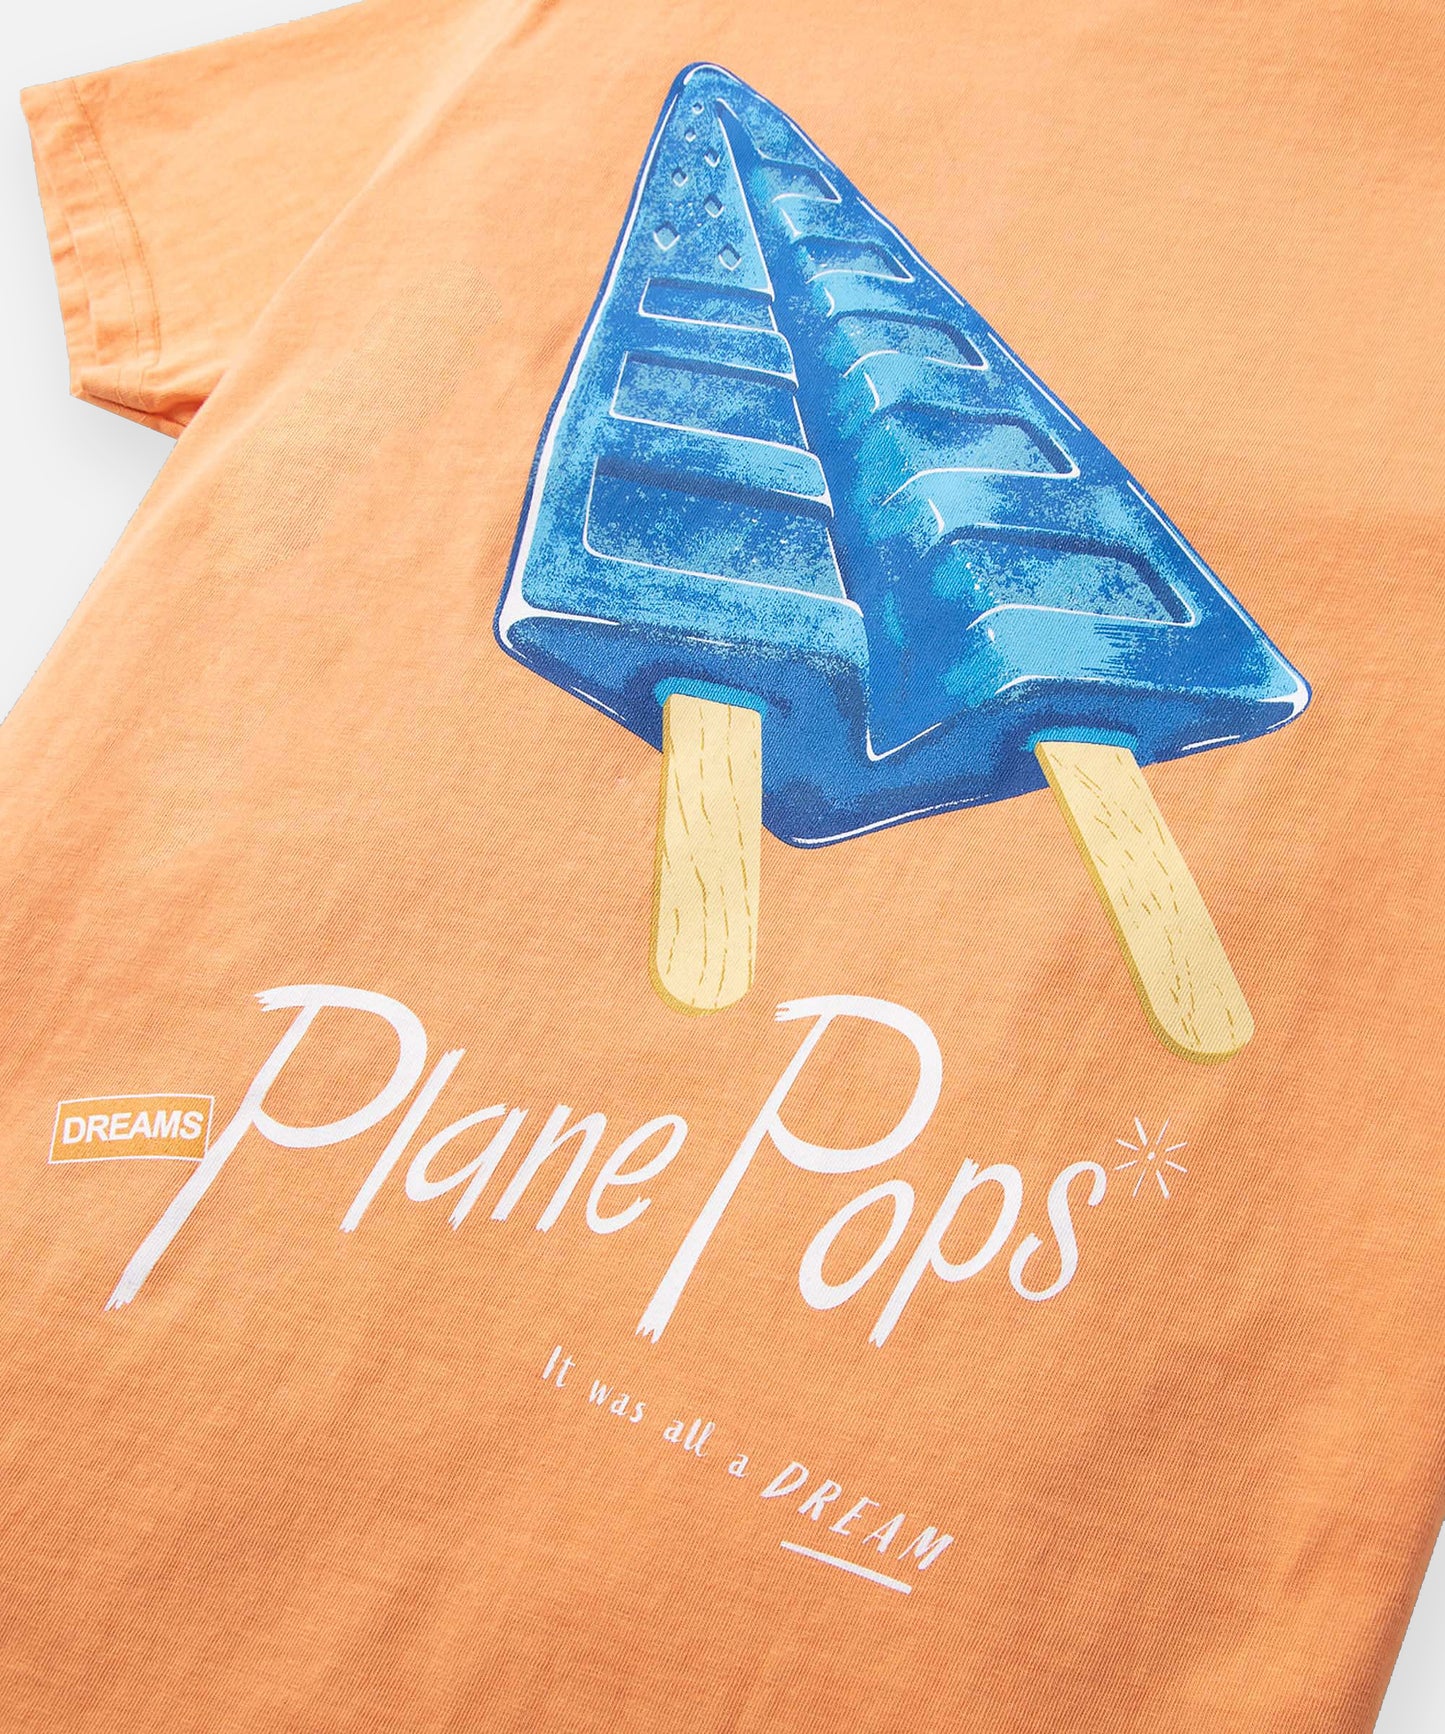 CUSTOM_ALT_TEXT: Closeup of Plane Pops print on Paper Planes Blue Raspberry Plane Pops Tee color Tangerine.